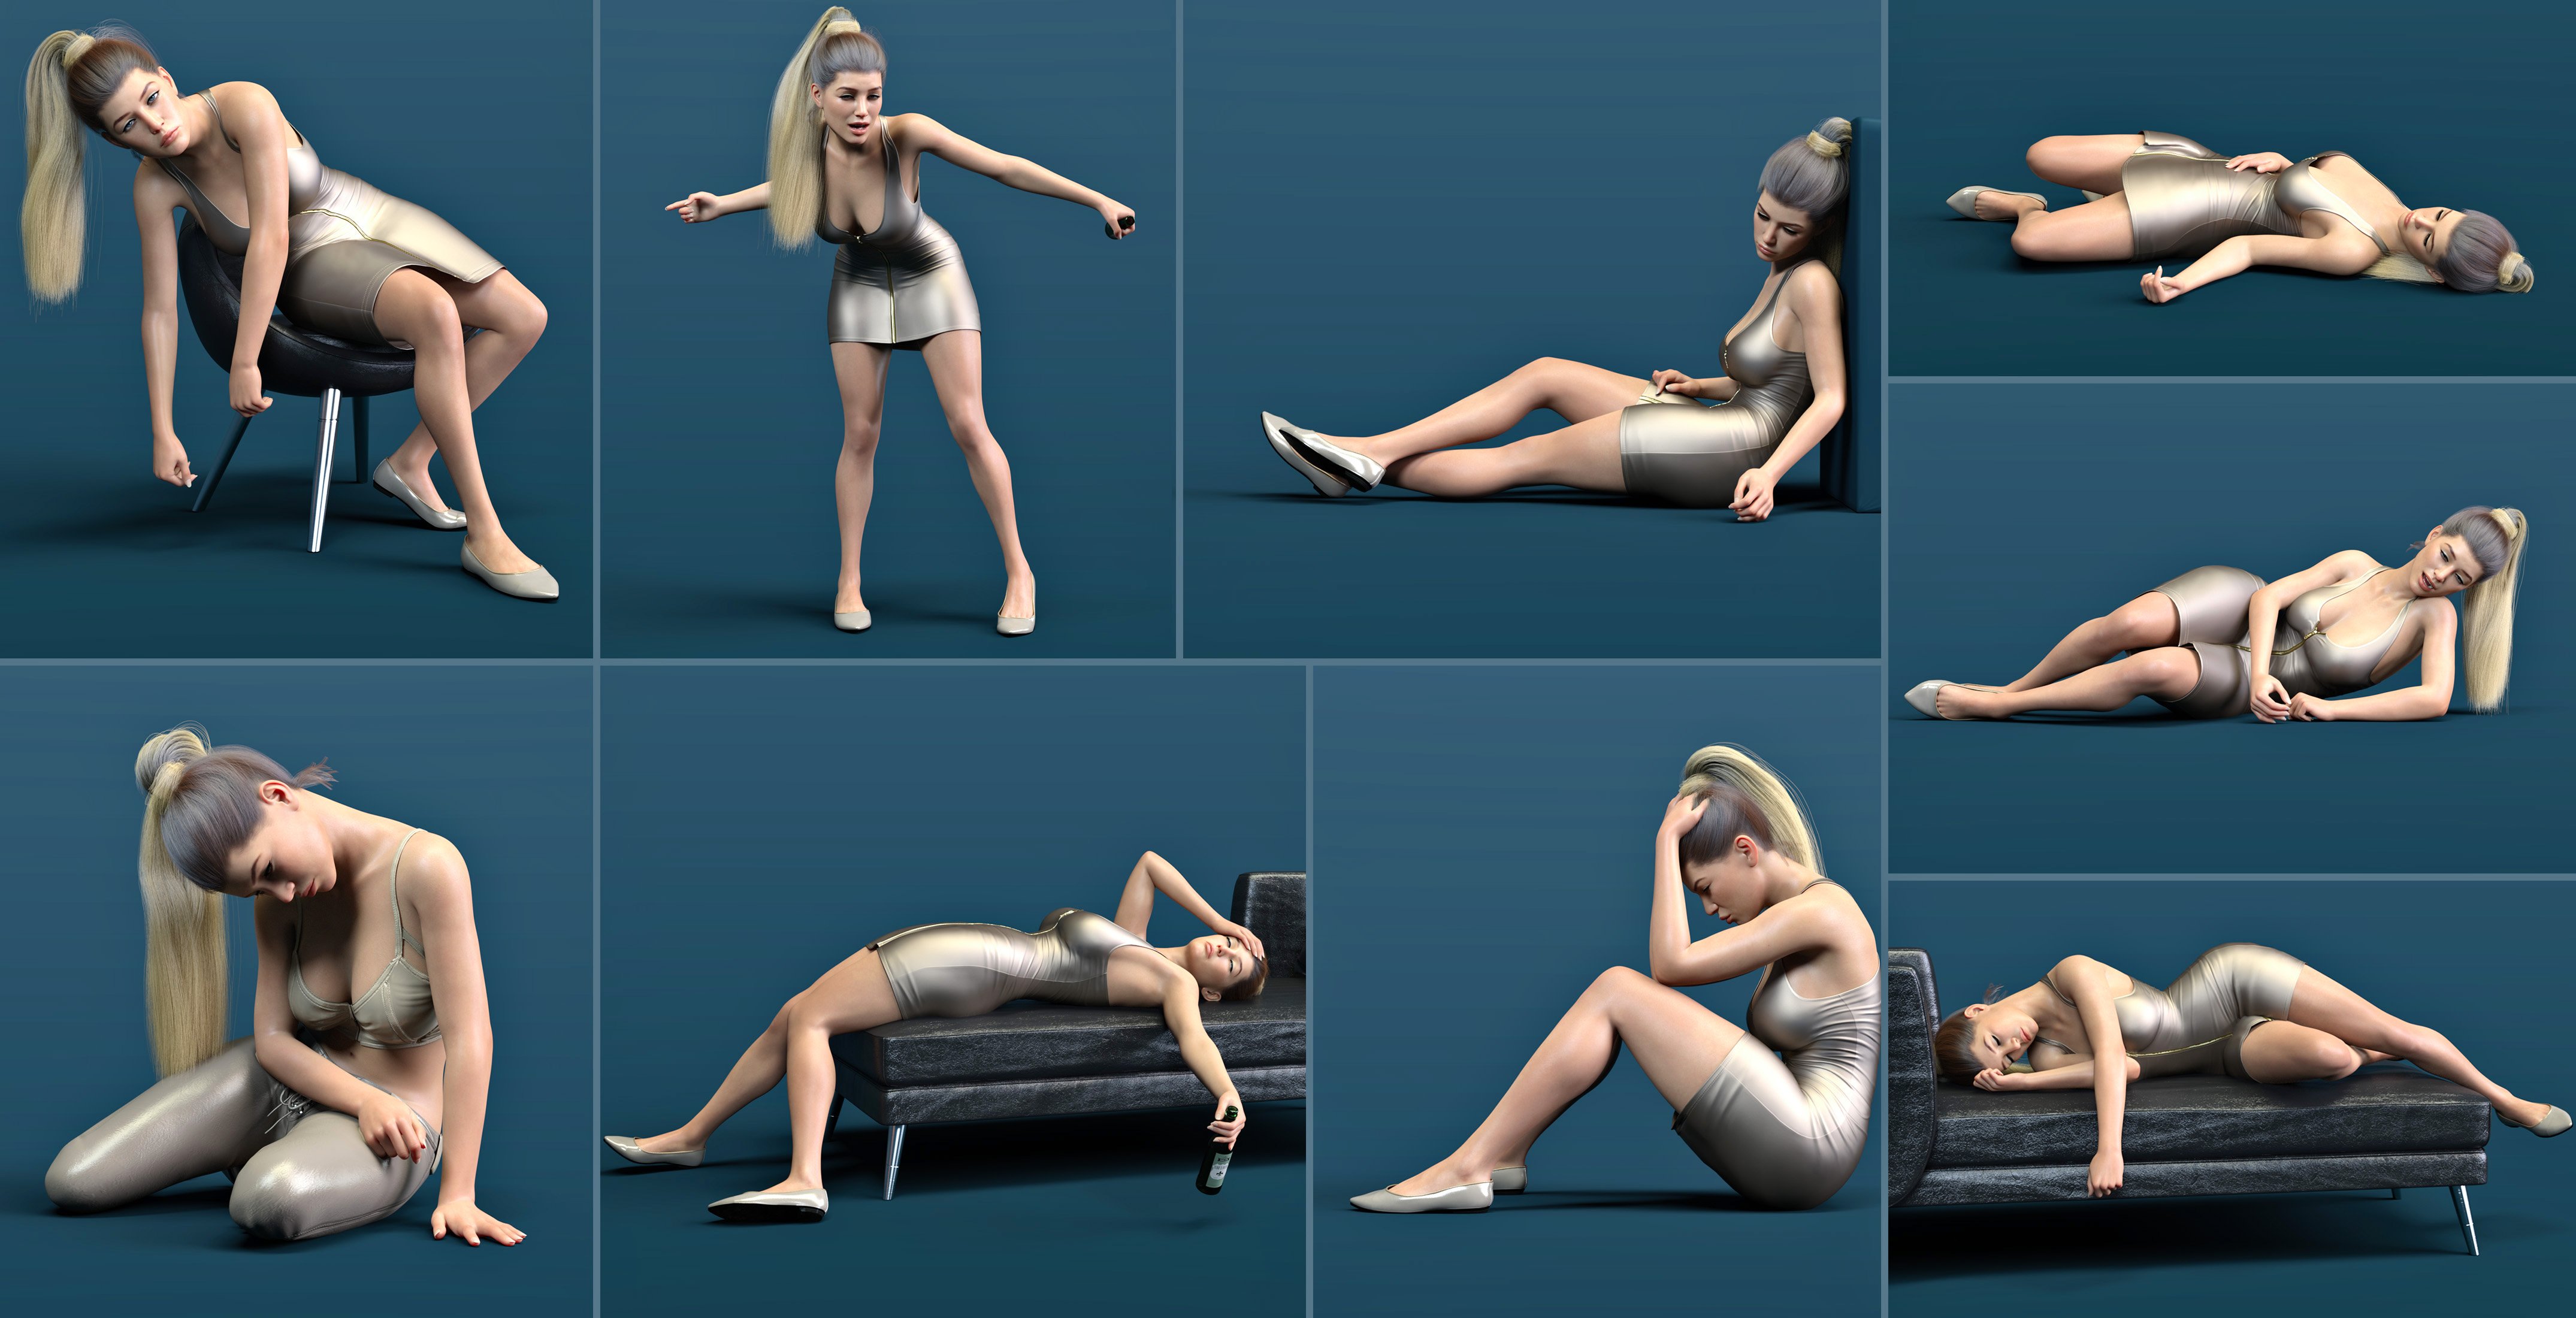 Z Drunken Behaviour for Genesis 8 and 8.1 Male and Female by: Zeddicuss, 3D Models by Daz 3D